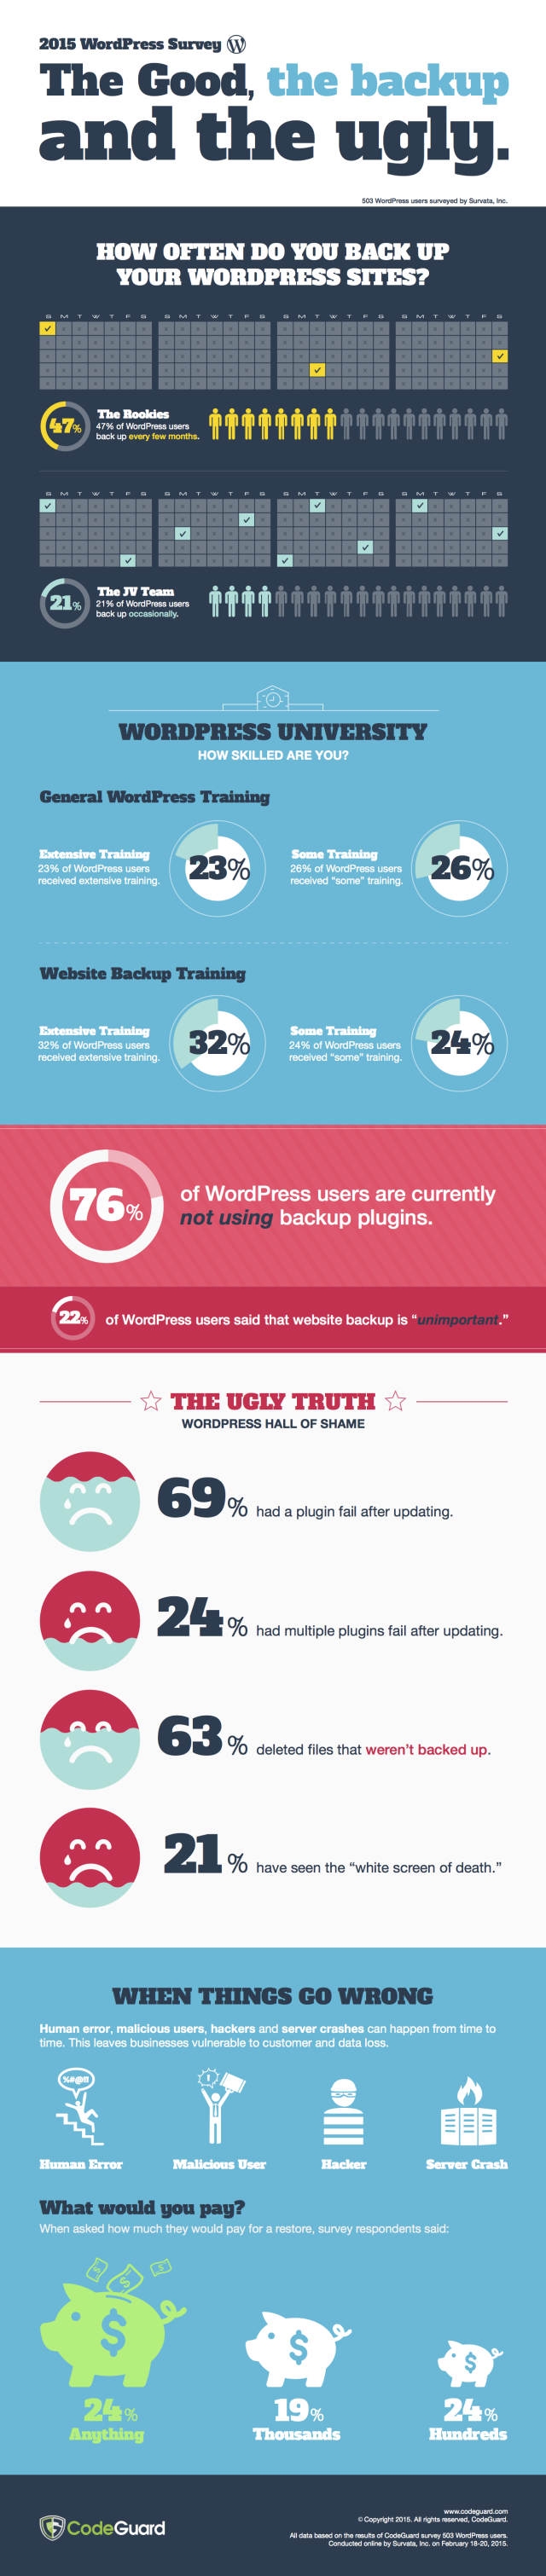 Wordpress Security Infographic